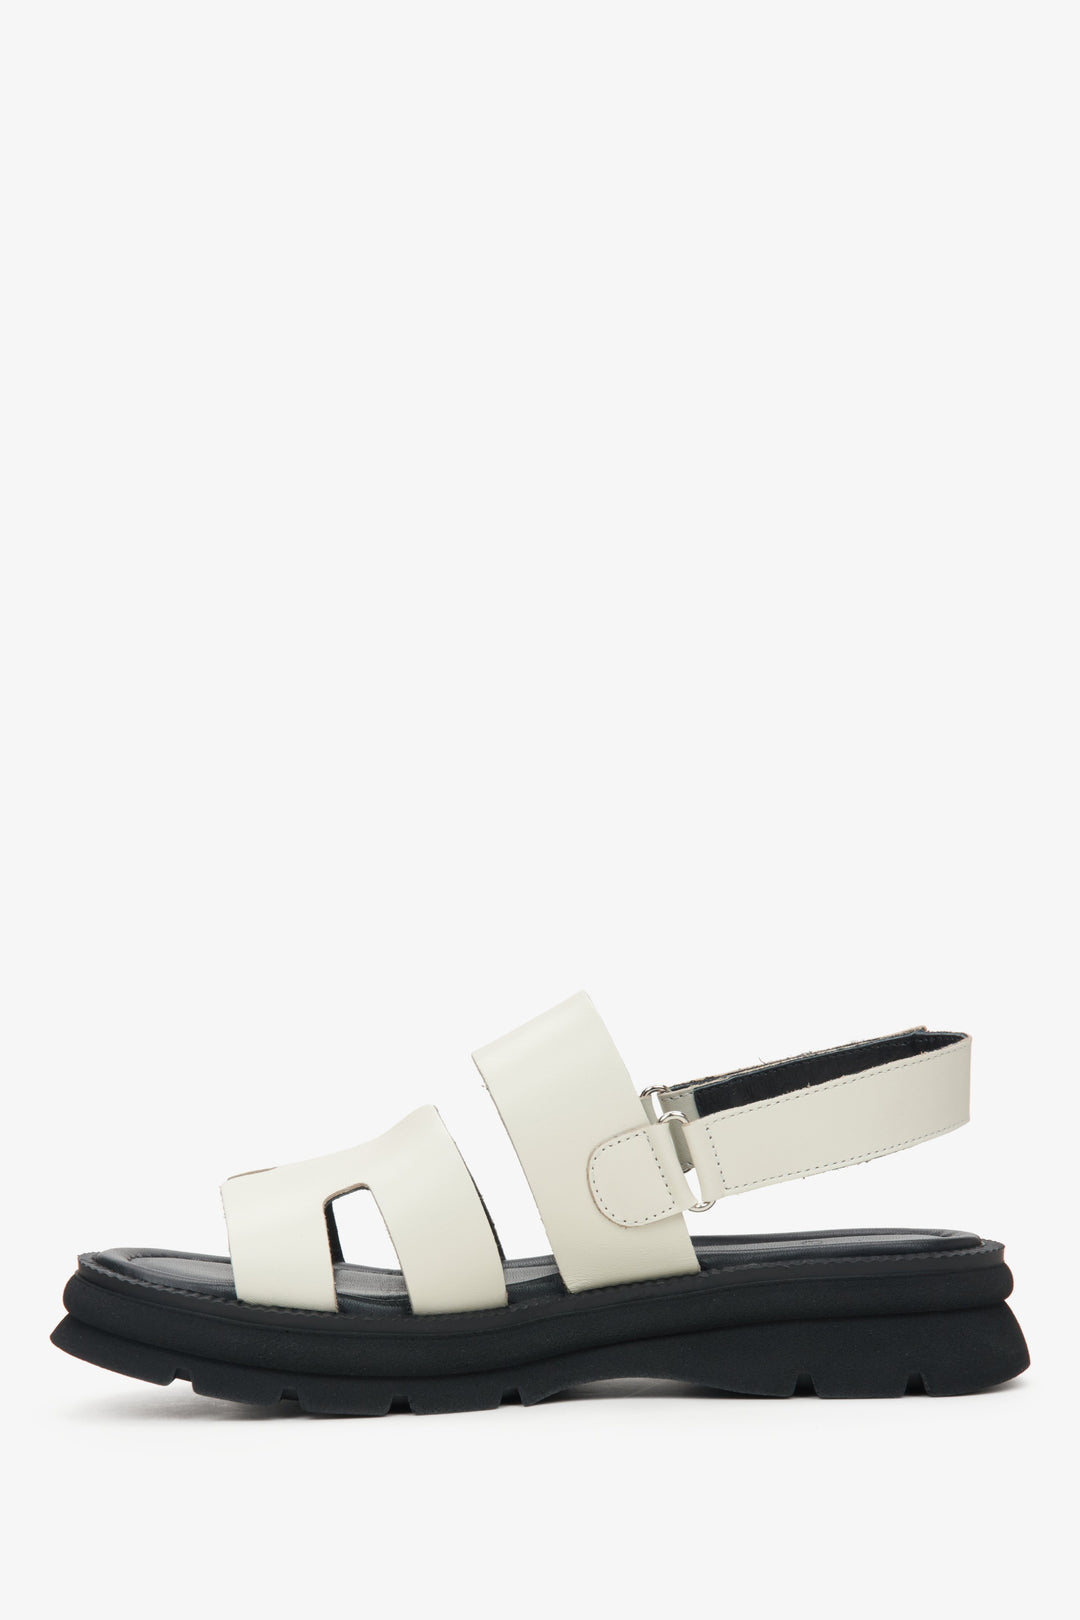 Białe damskie sandały ze skóry naturalnej Estro - profil buta.